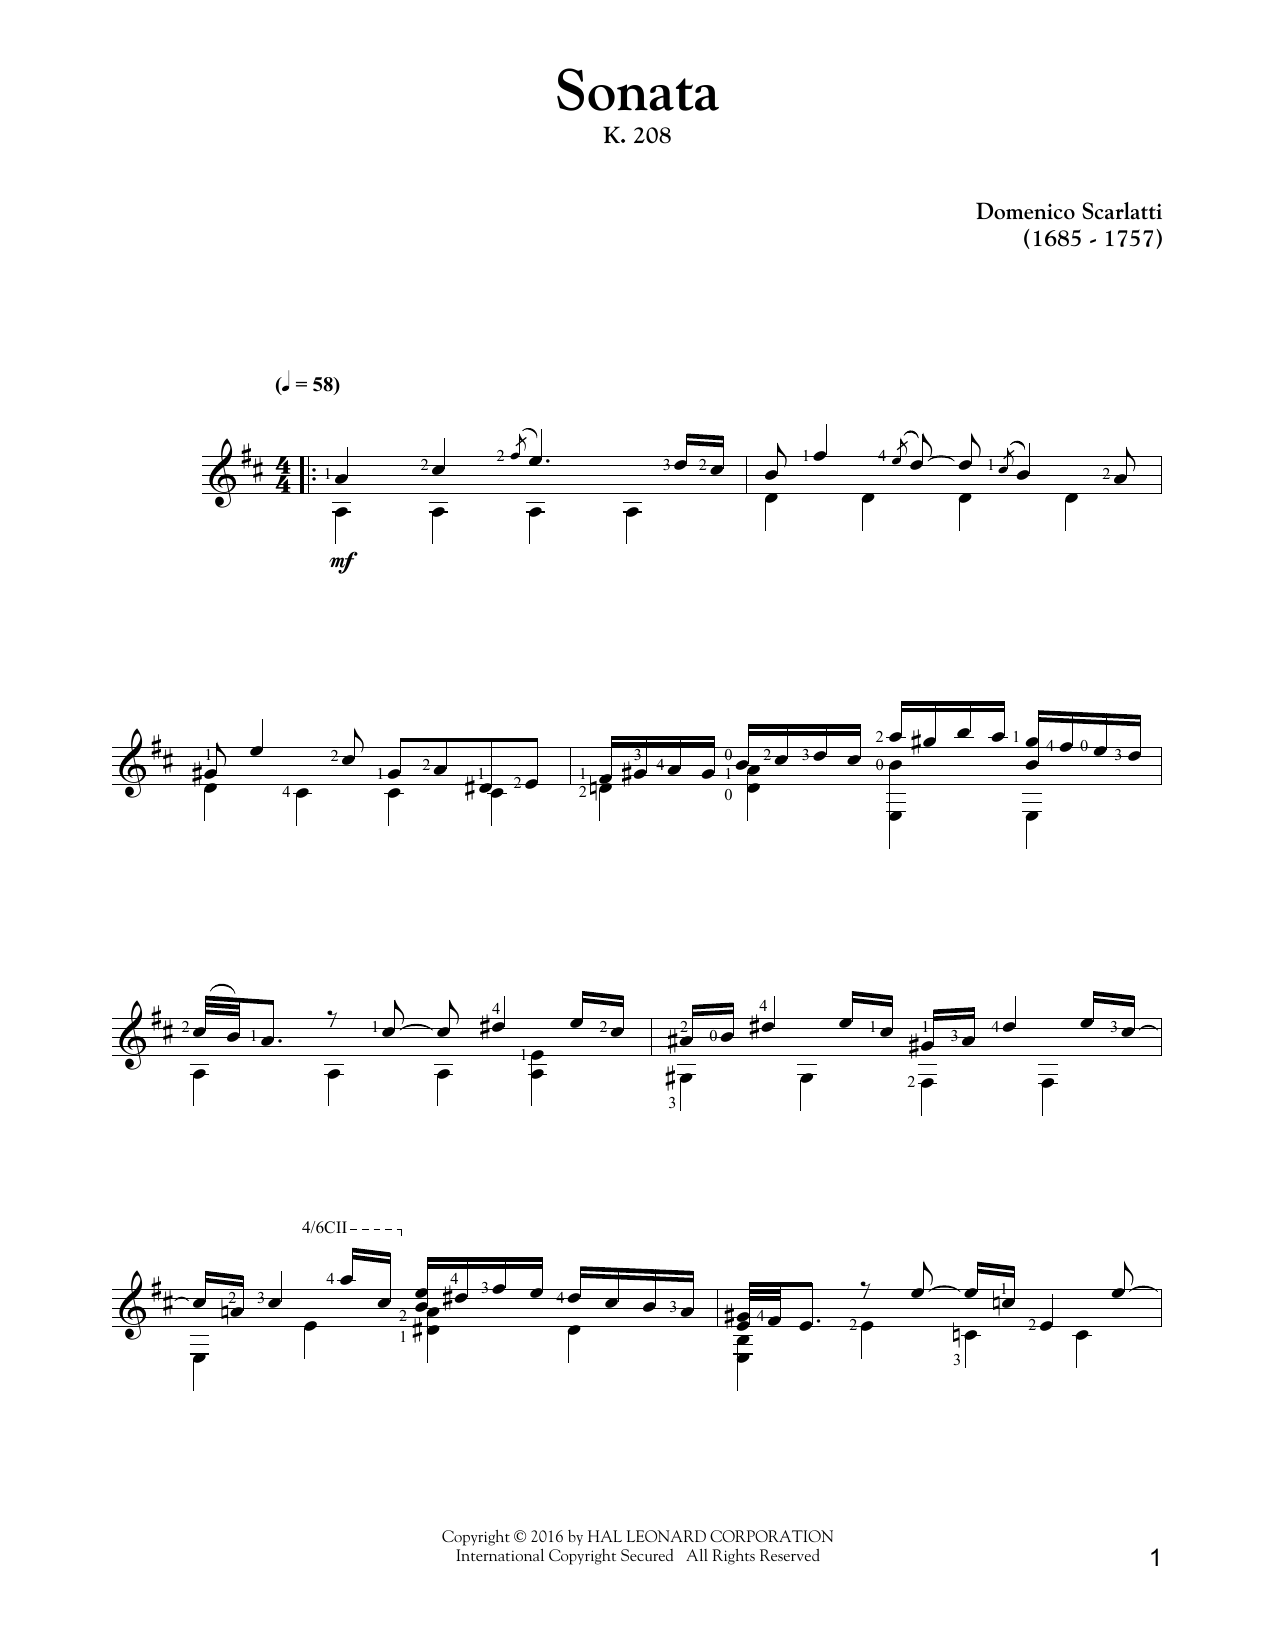 Domenico Scarlatti Sonata In G Major, K. 208 Sheet Music Notes & Chords for Guitar Tab - Download or Print PDF